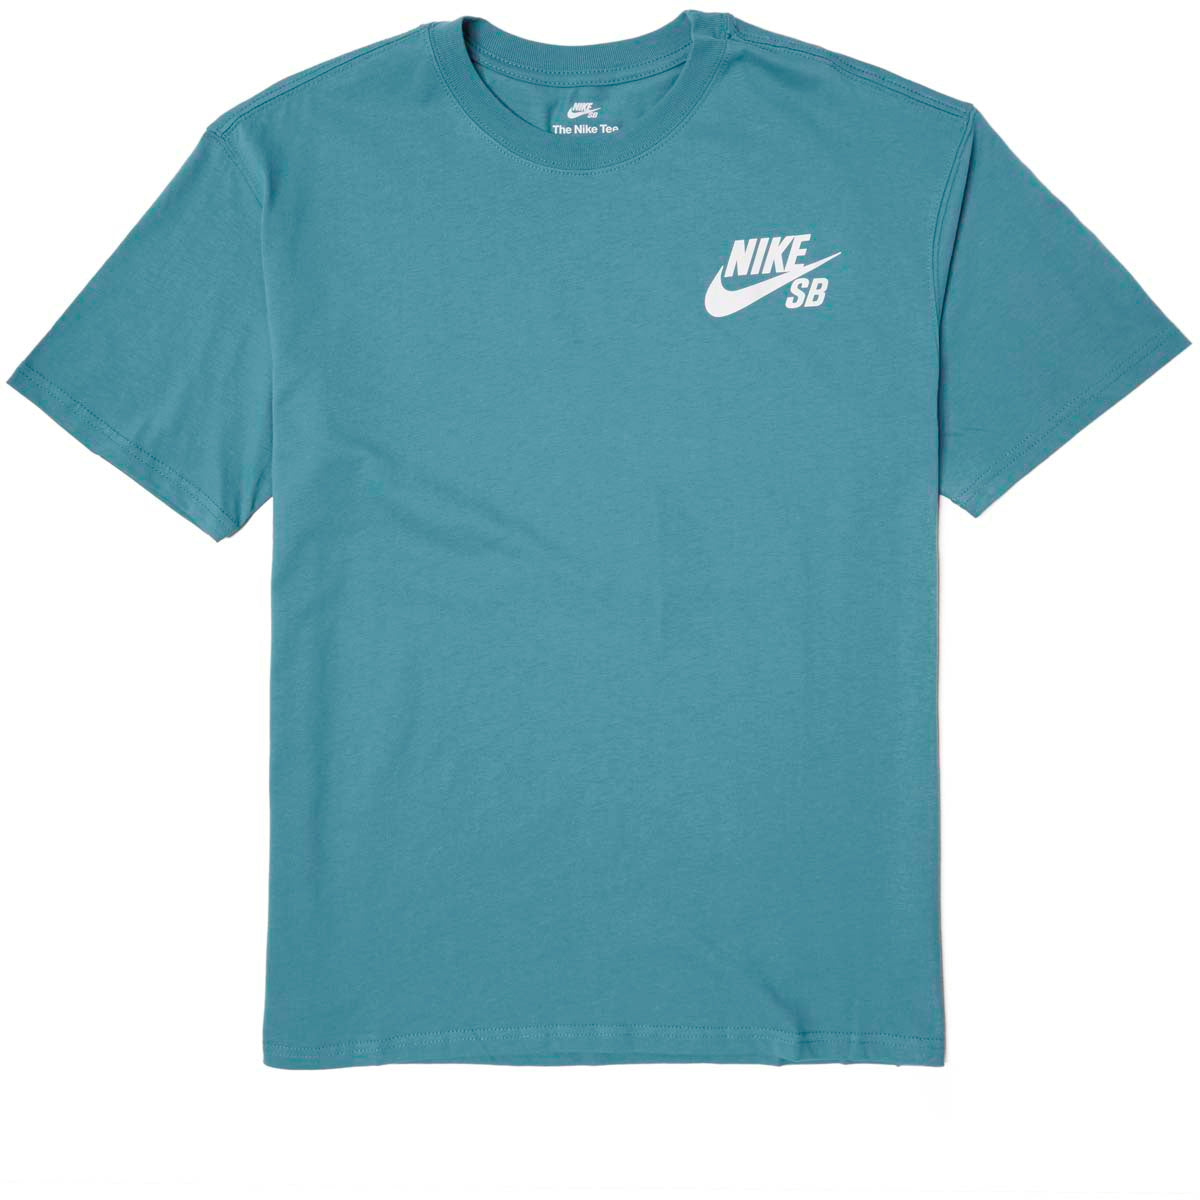 Nike SB New Logo T-Shirt - Mineral Teal image 1